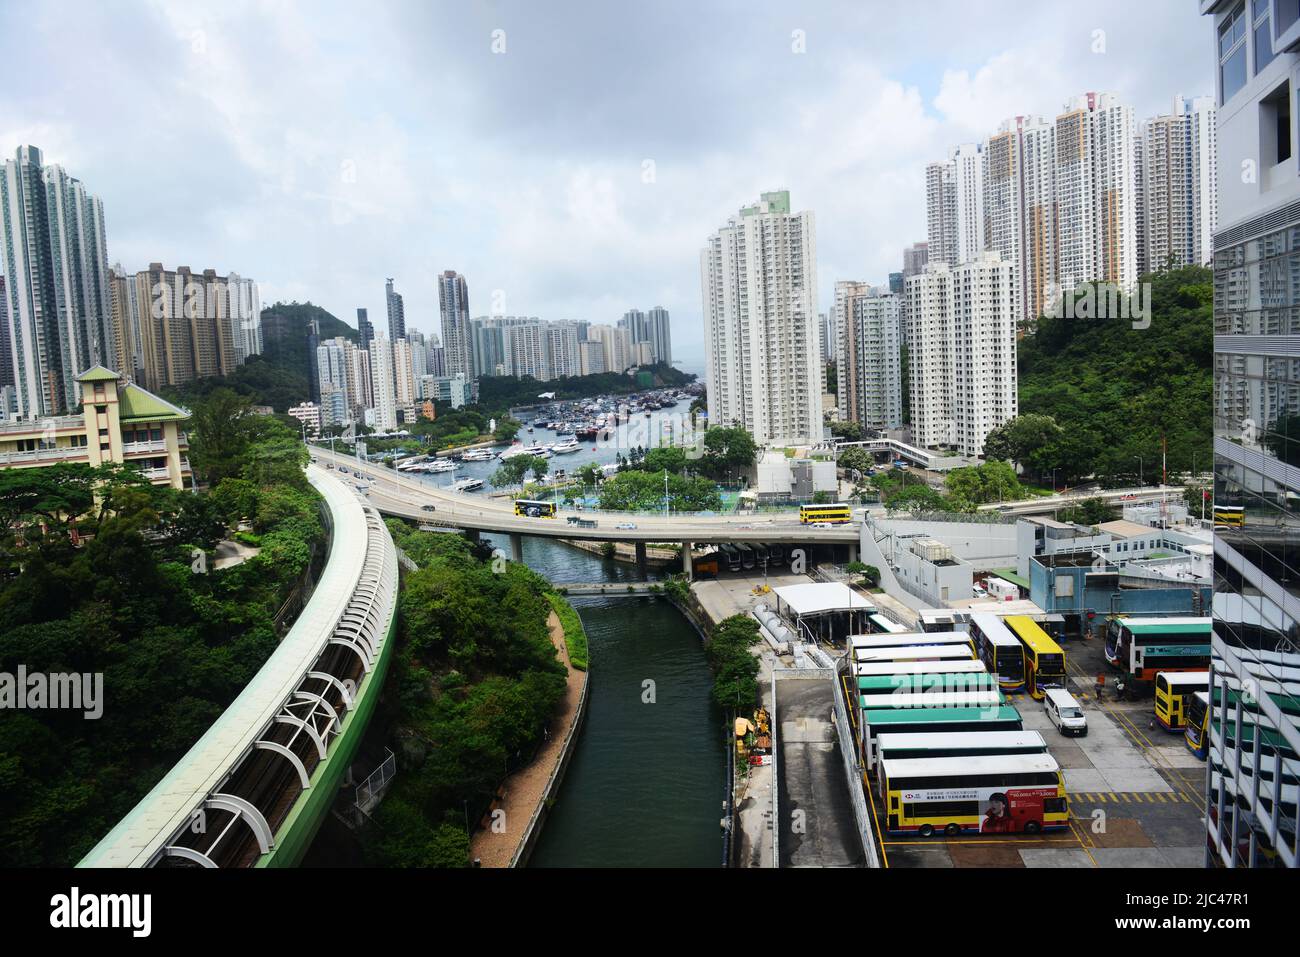 The Elevated Mtr South Island Line Track In Wong Chuk Hang Hong Kong